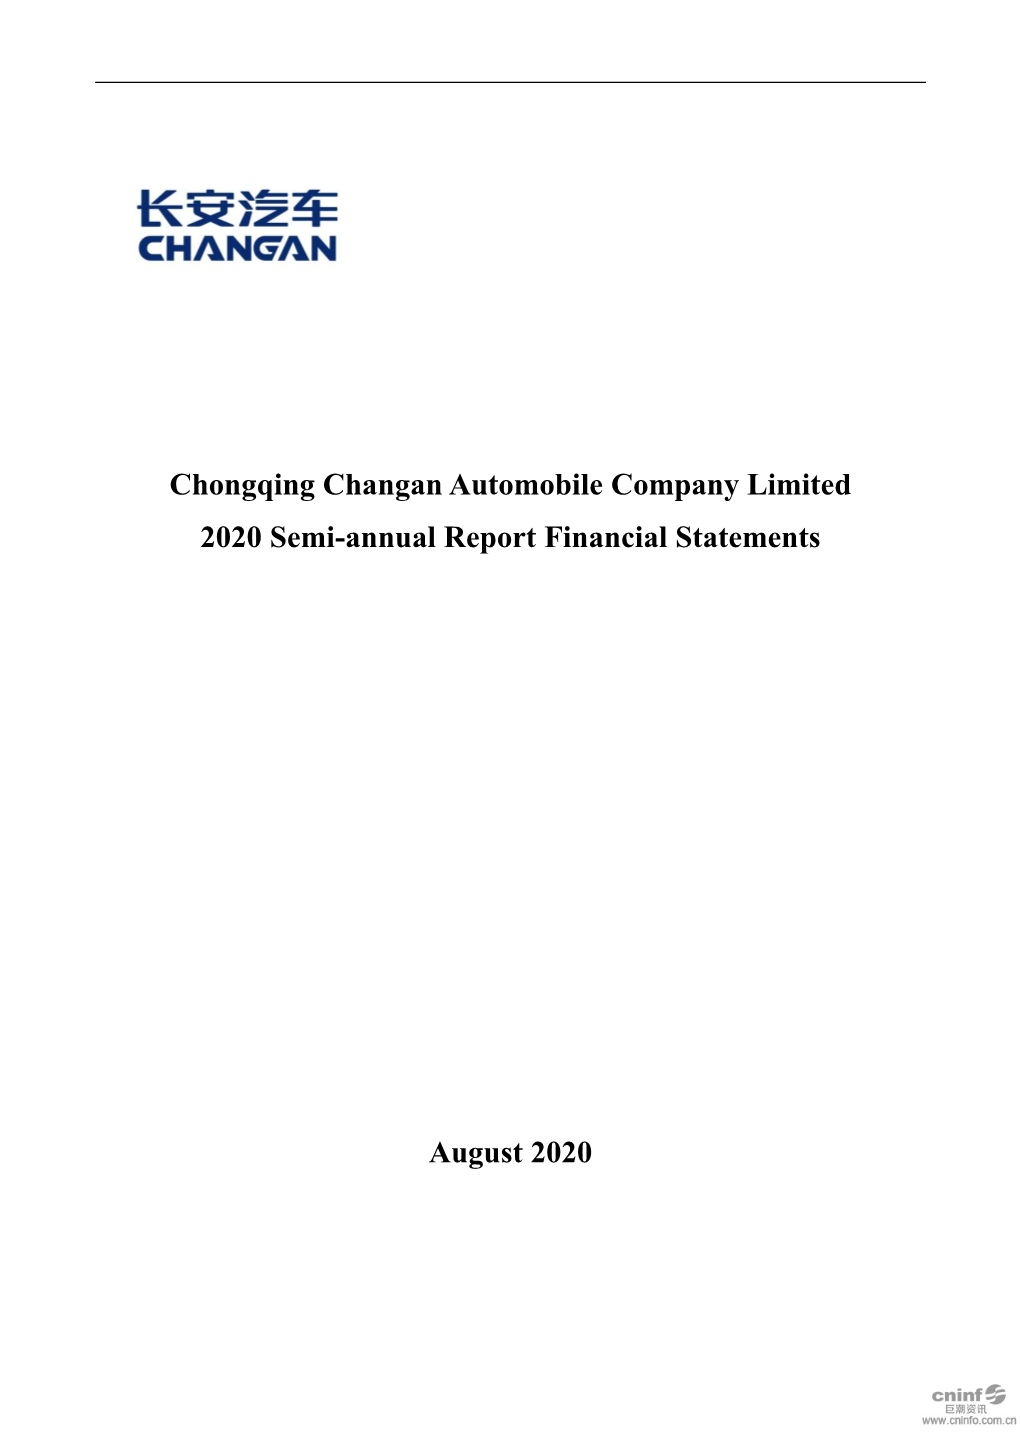 Chongqing Changan Automobile Company Limited 2020 Semi-Annual Report Financial Statements